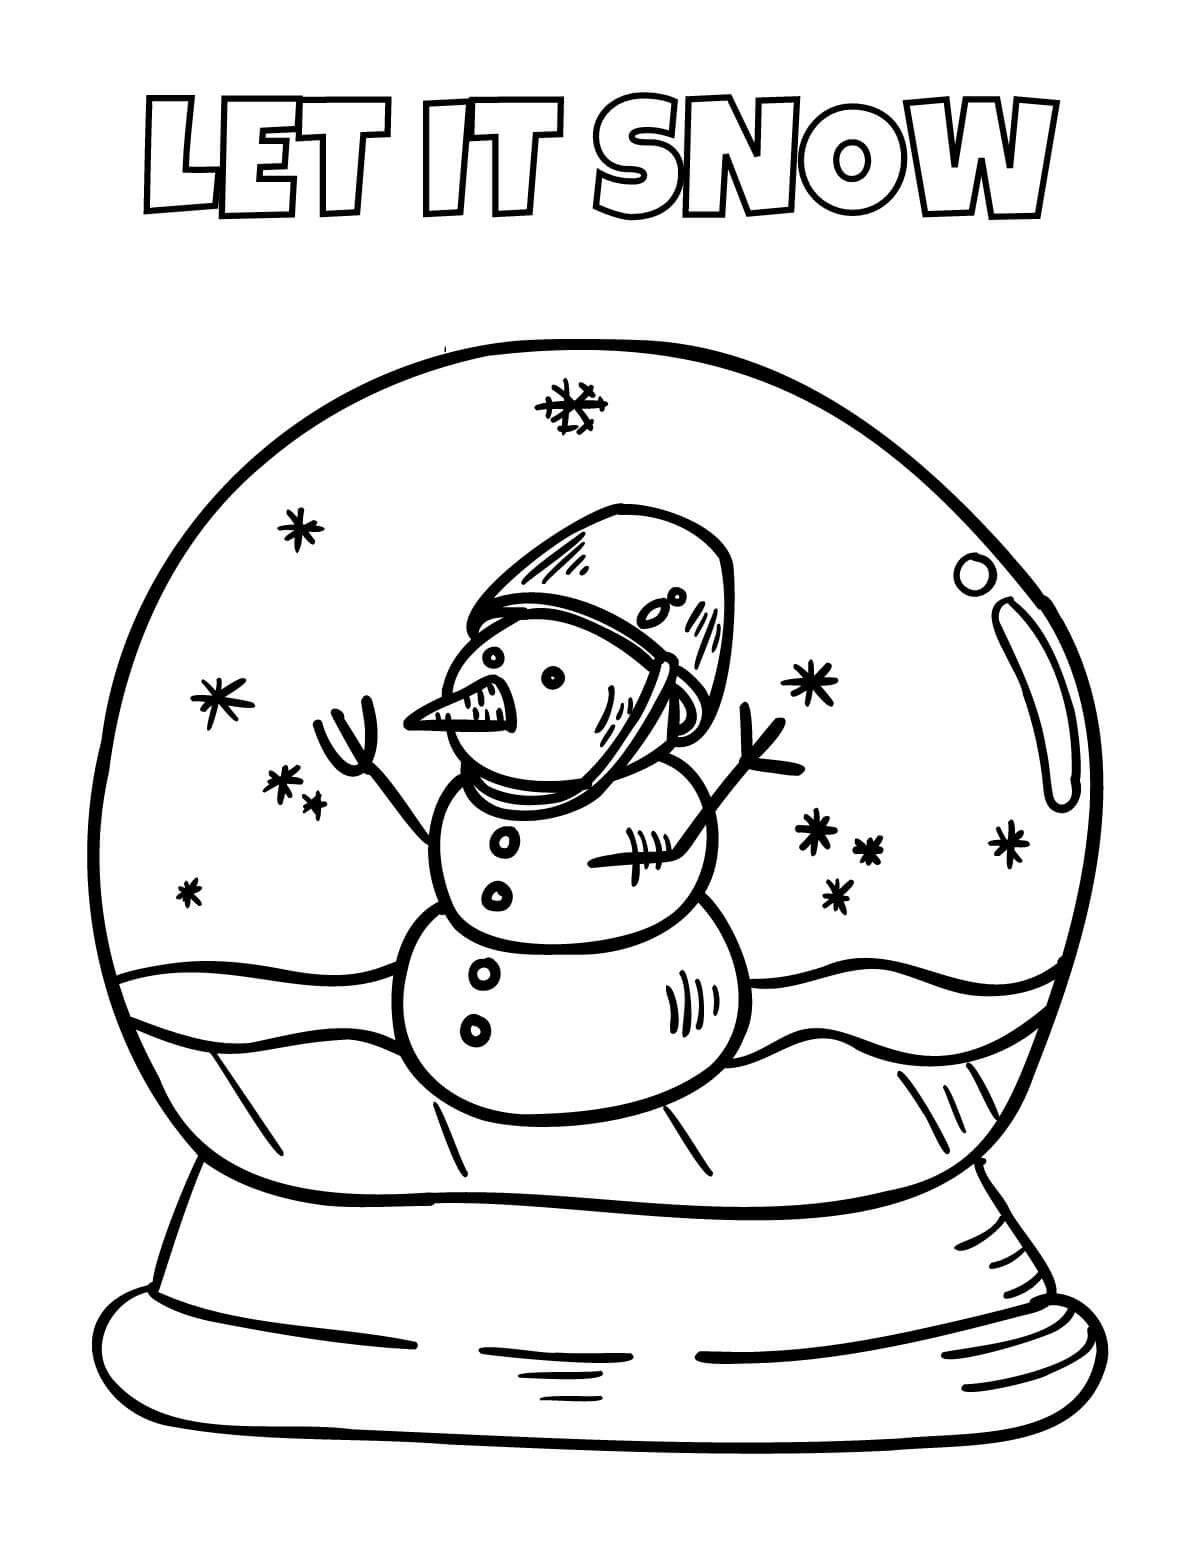 Snowglobe with snowman